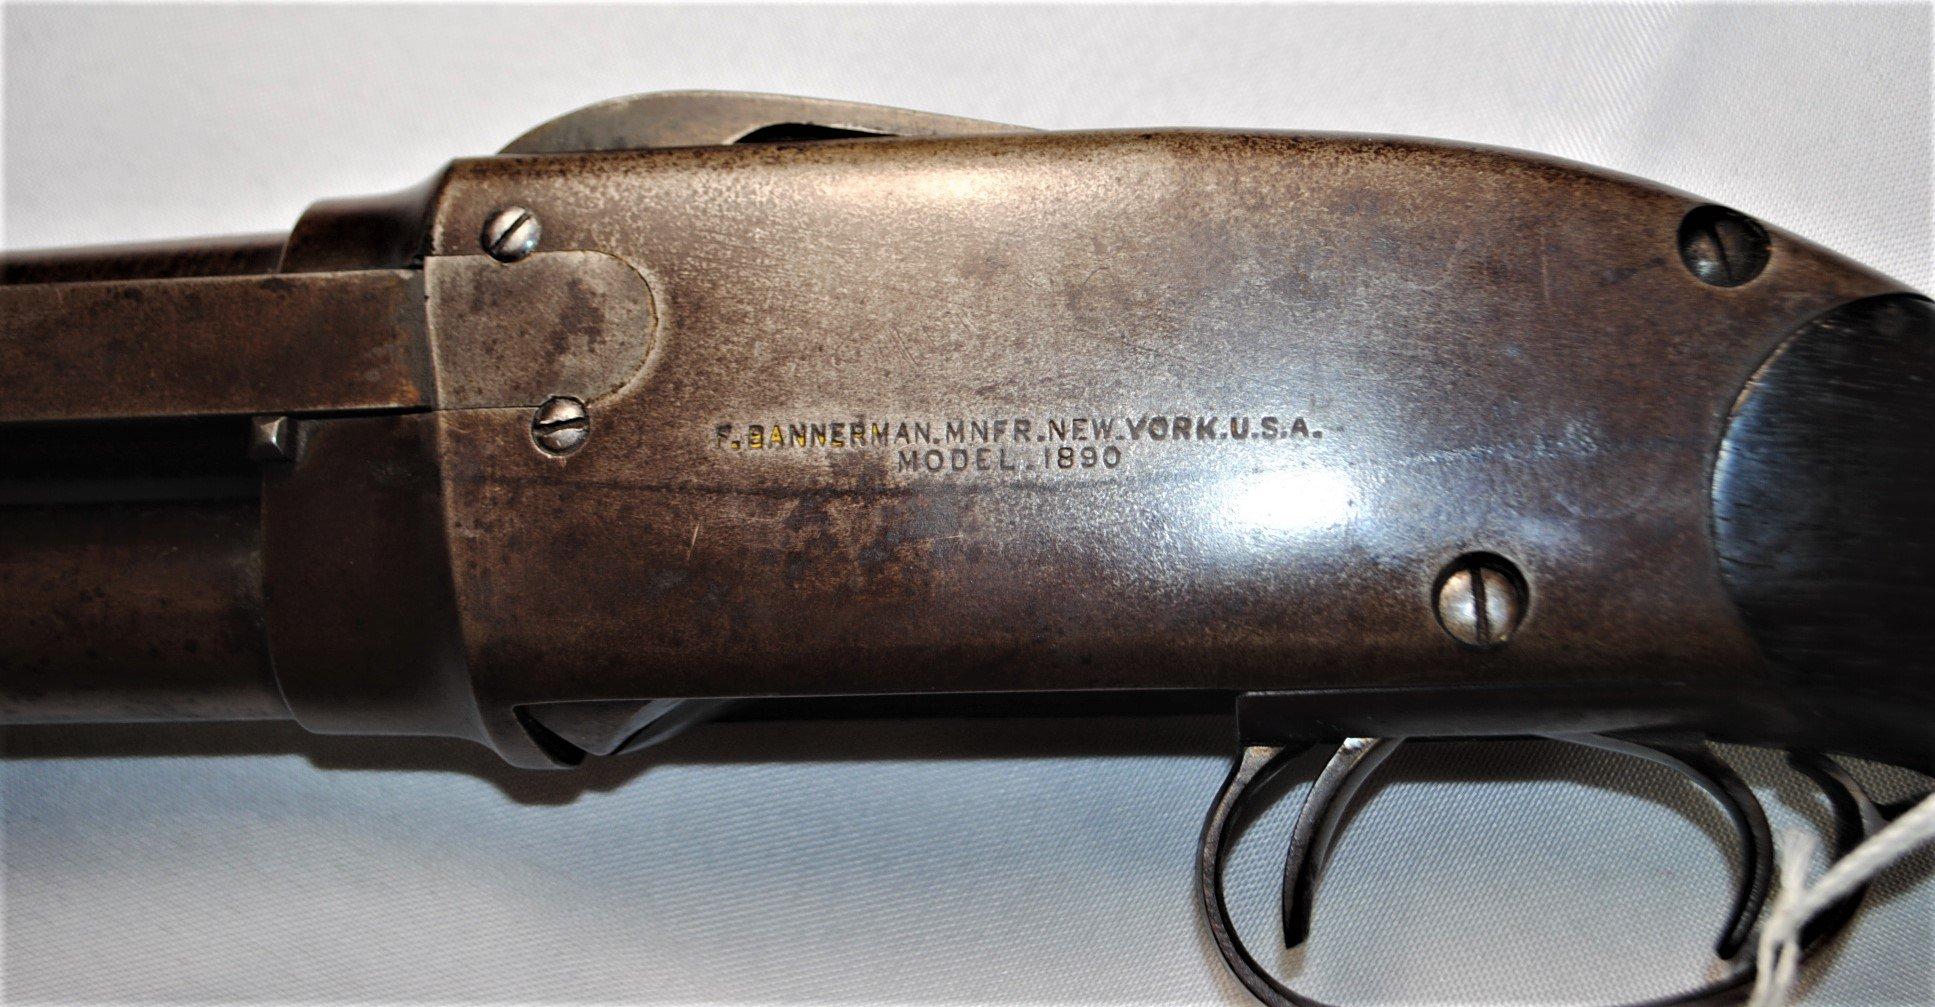 RARE SPENCER RPGT.SHOT GUN PAT. APR. 1882